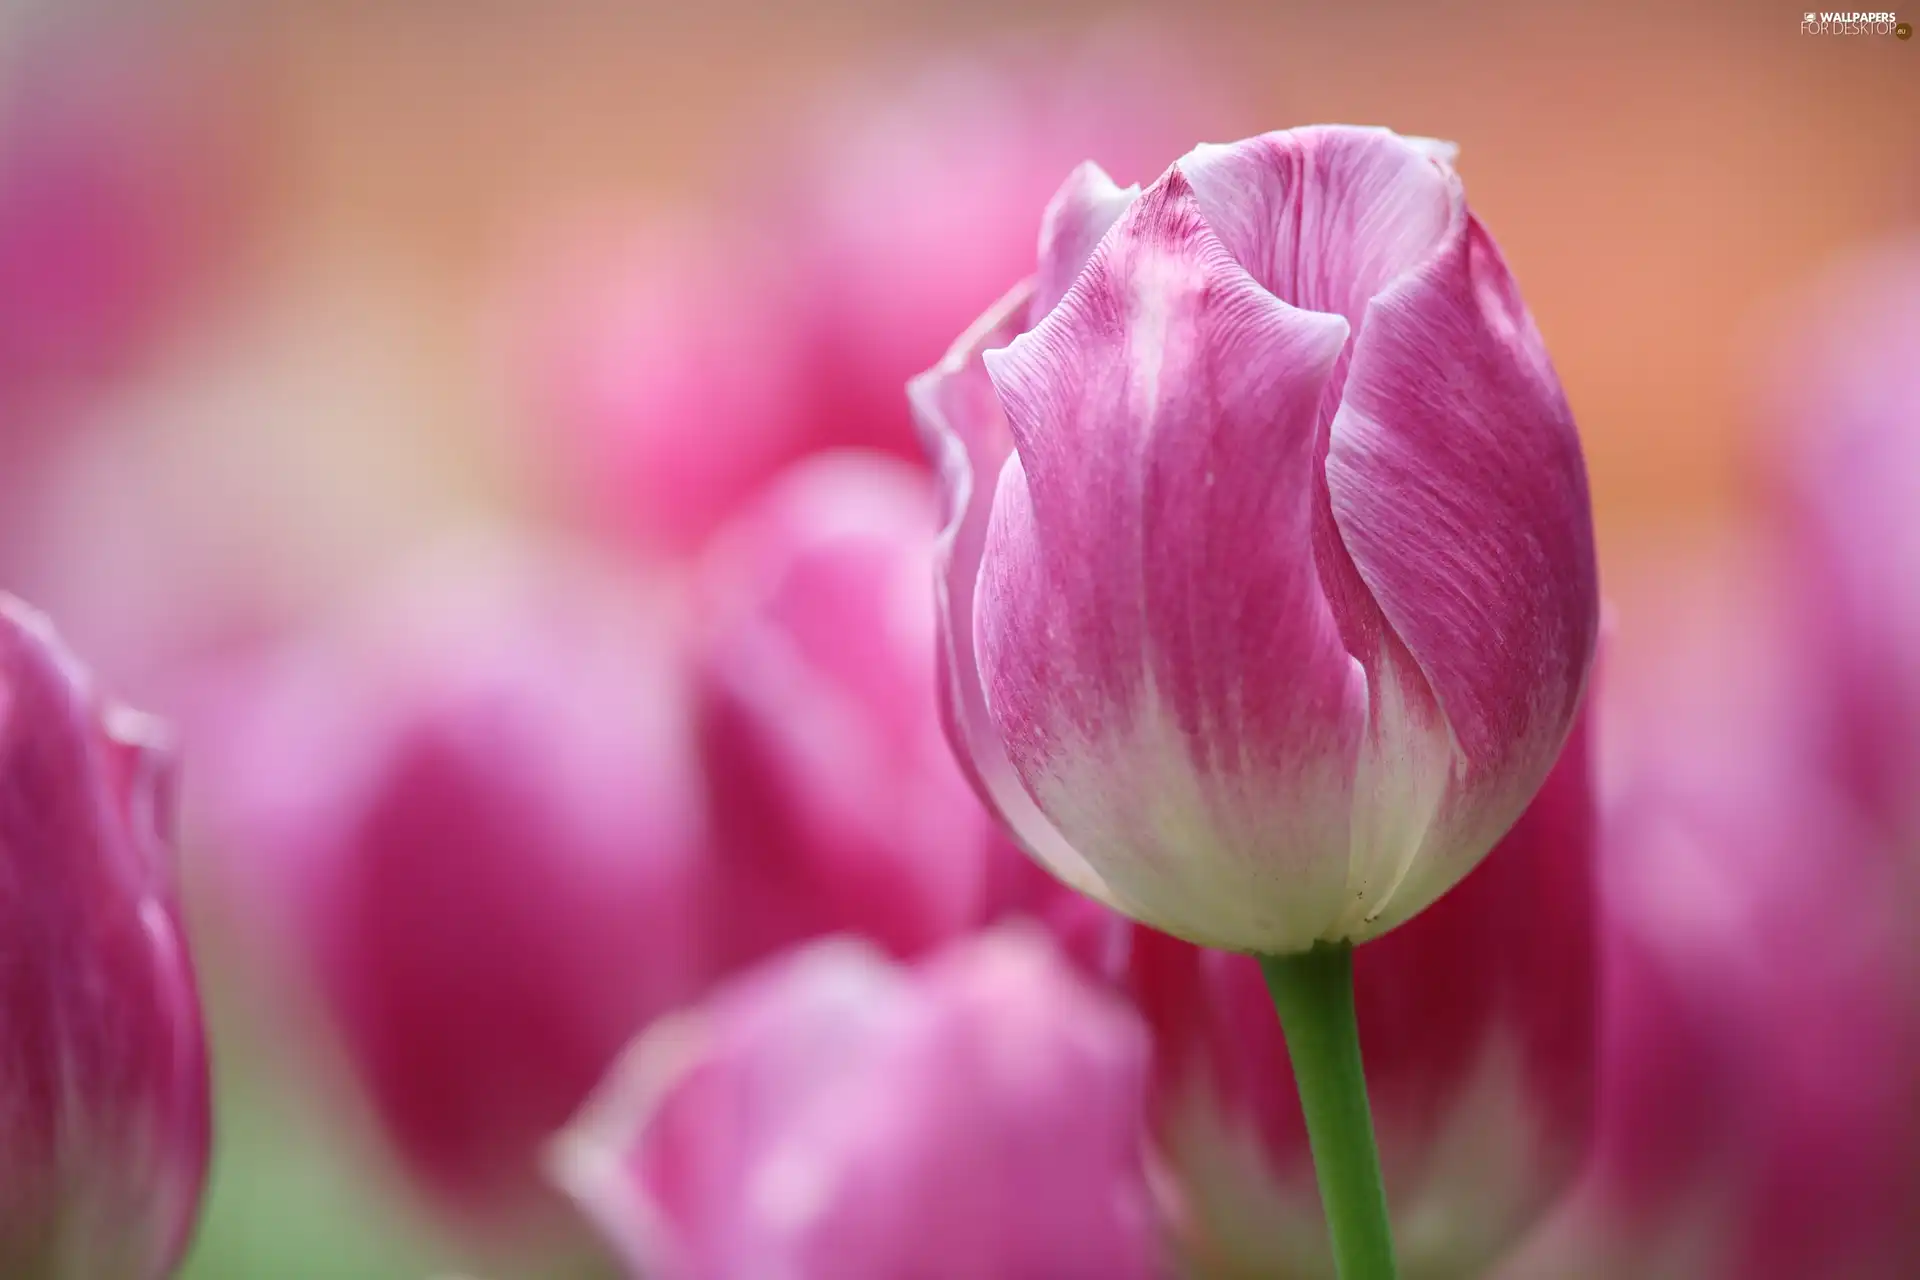 blurry background, Pink-White, tulip